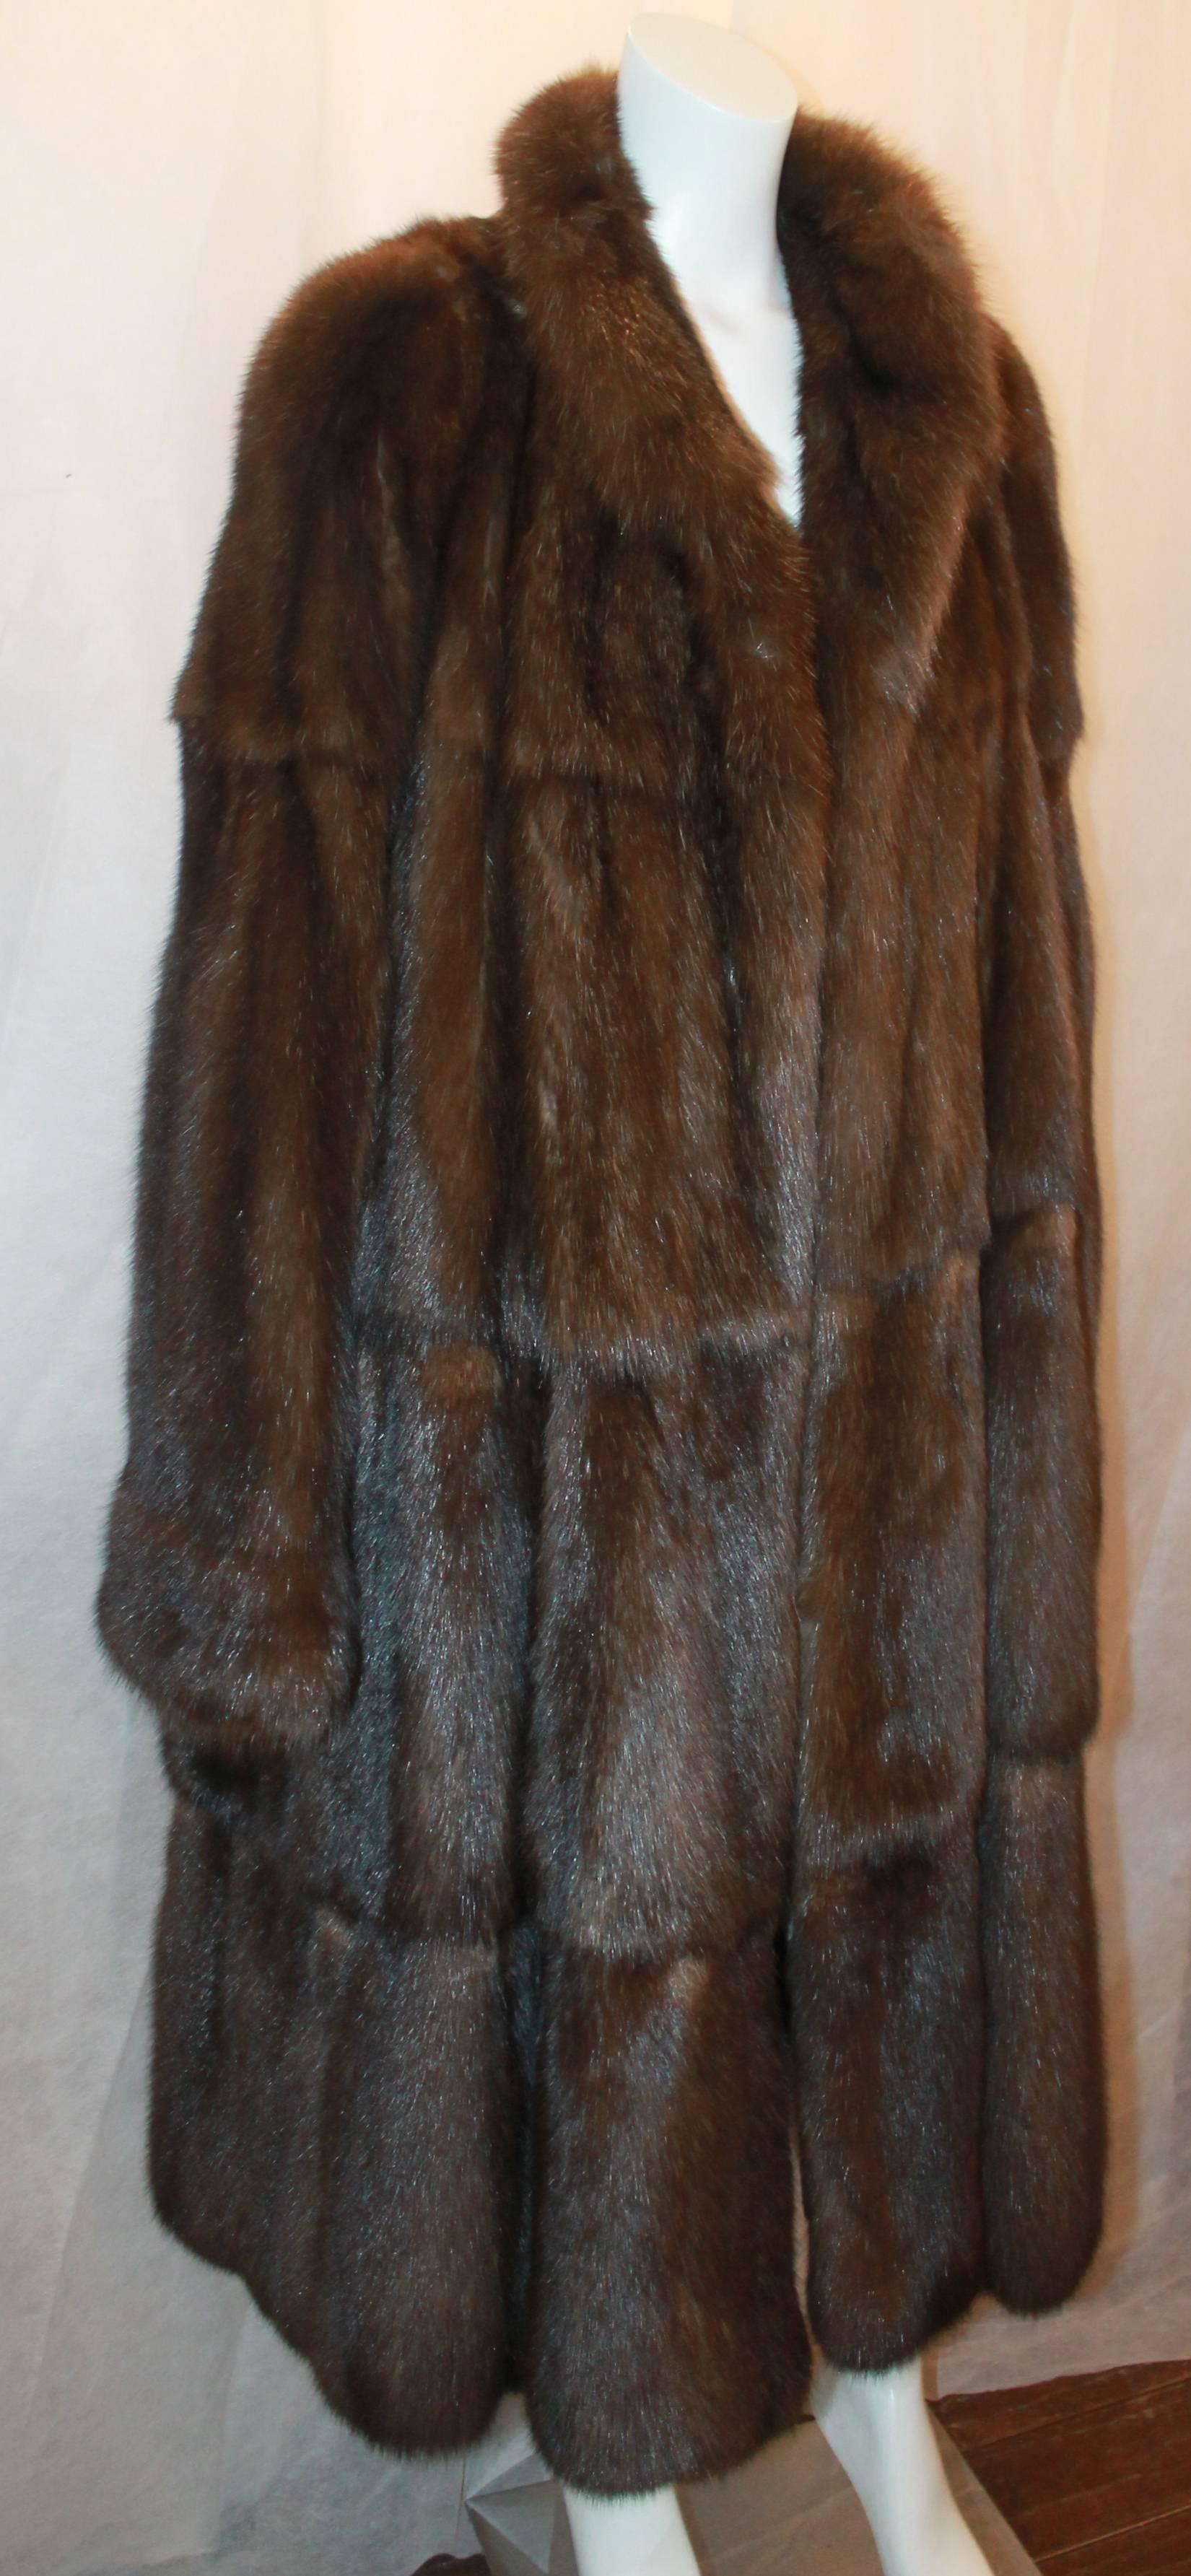 Valentino Vintage Brown Sable Fur Coat - L - circa 1980's .  This beautiful vintage fur coat is in excellent condition.  It features a gorgeous sable fur and a longer length.

Measurements:
Shoulder to Shoulder: 18